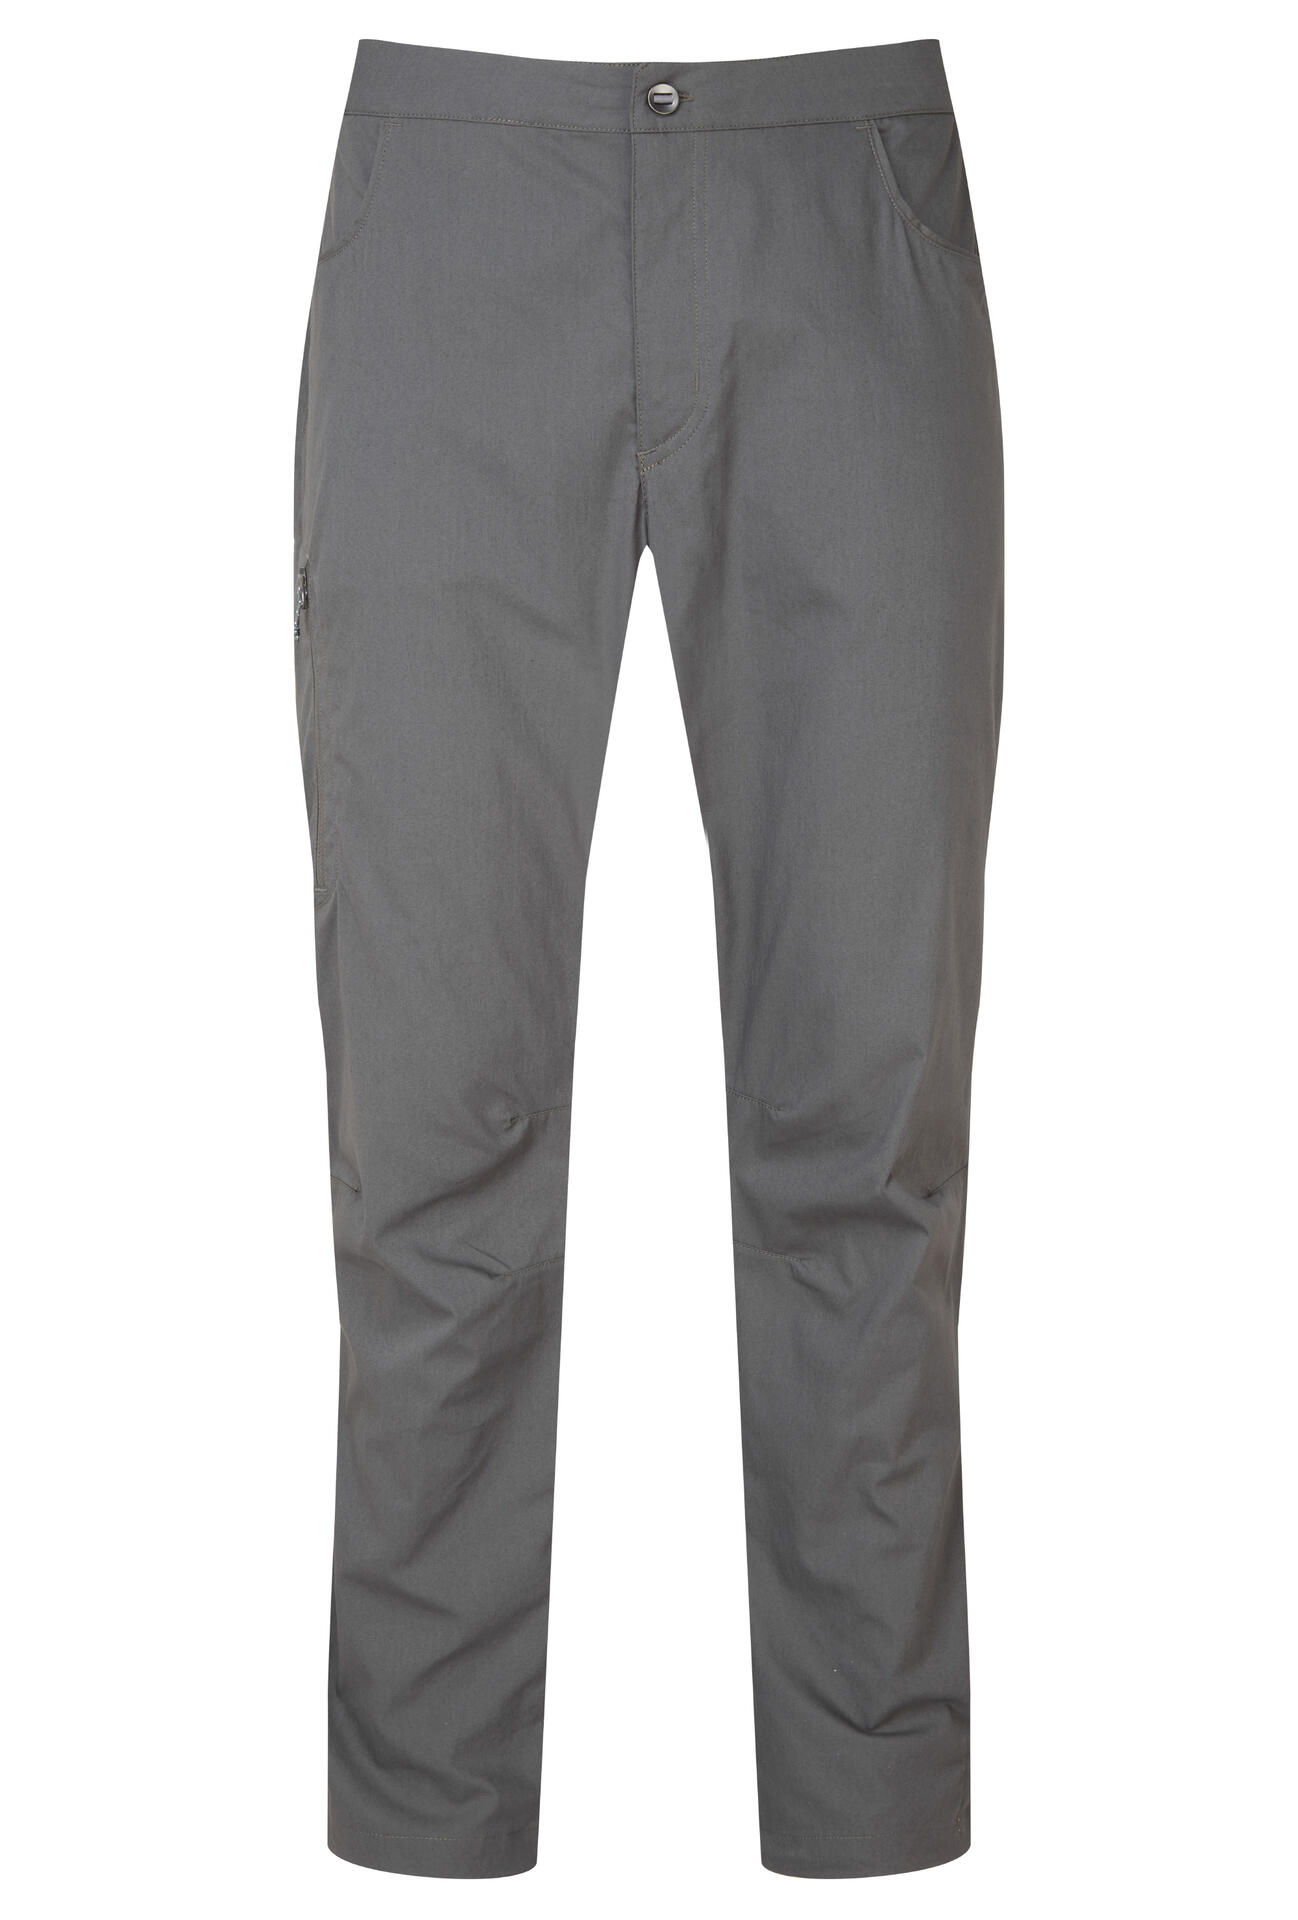 Mountain Equipment Anvil Pant Men'S - běžná délka Barva: Shadow Grey, Velikost: M